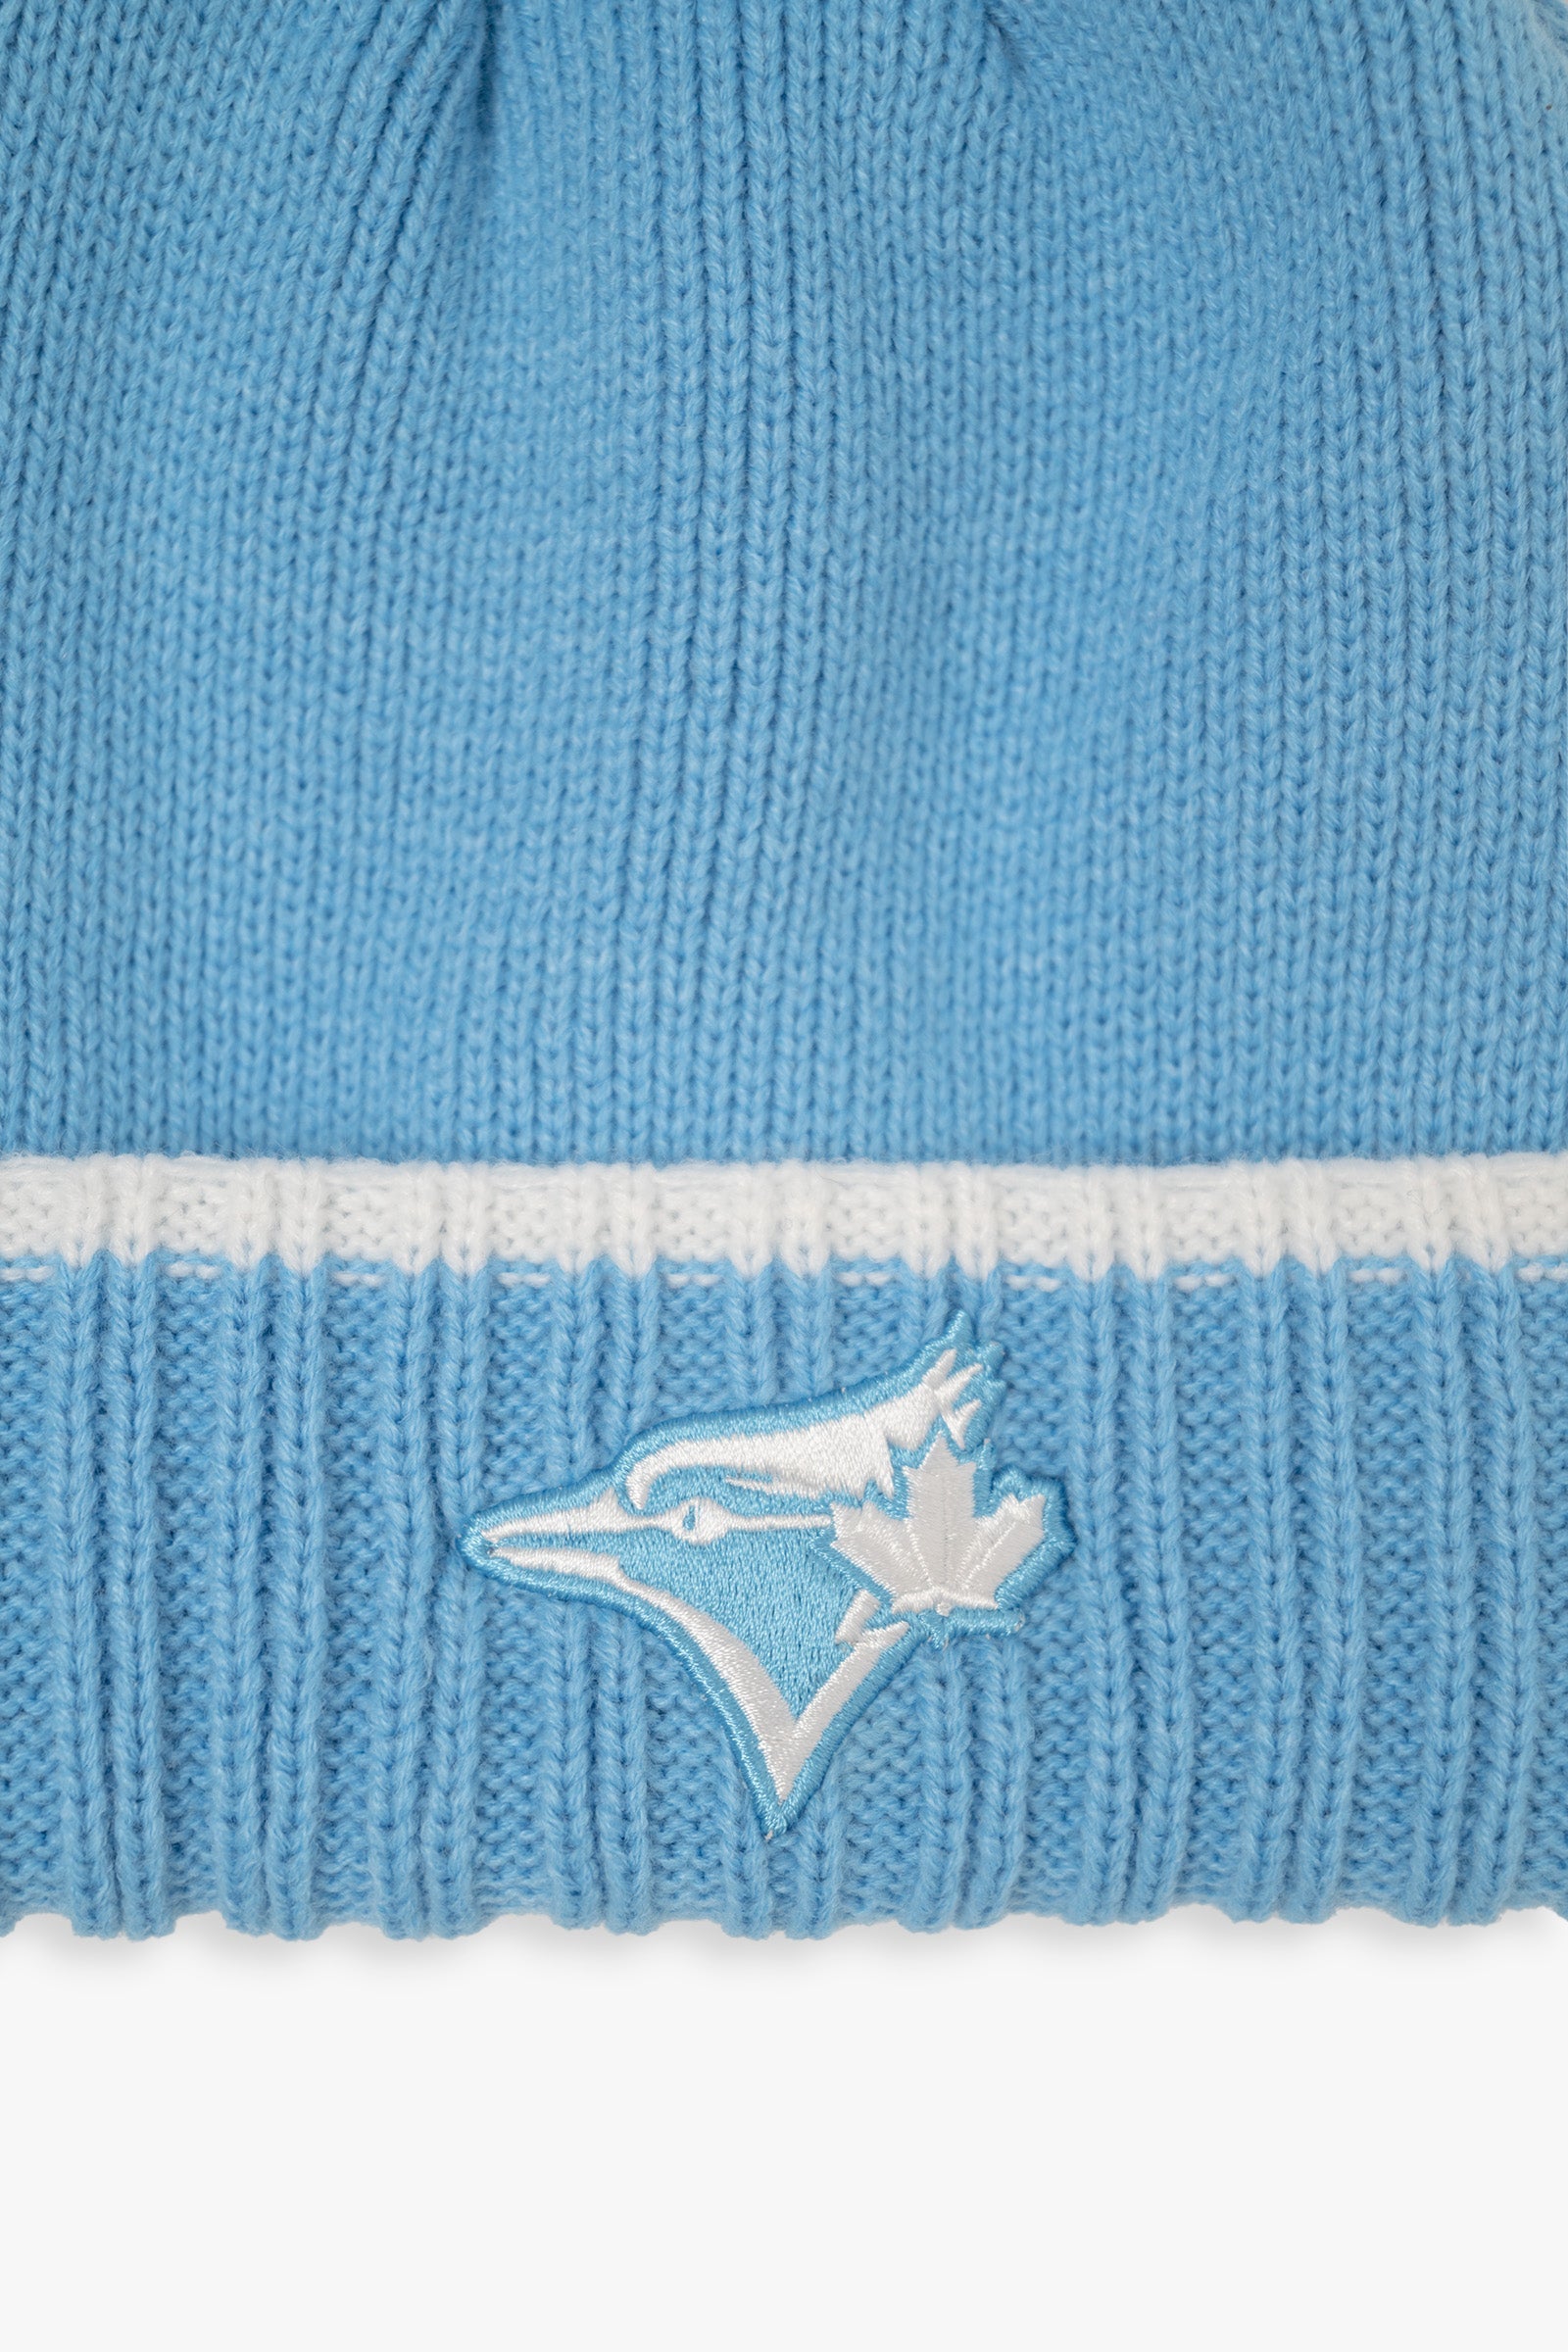 MLB Toronto Blue Jays Ladies Knit Toque